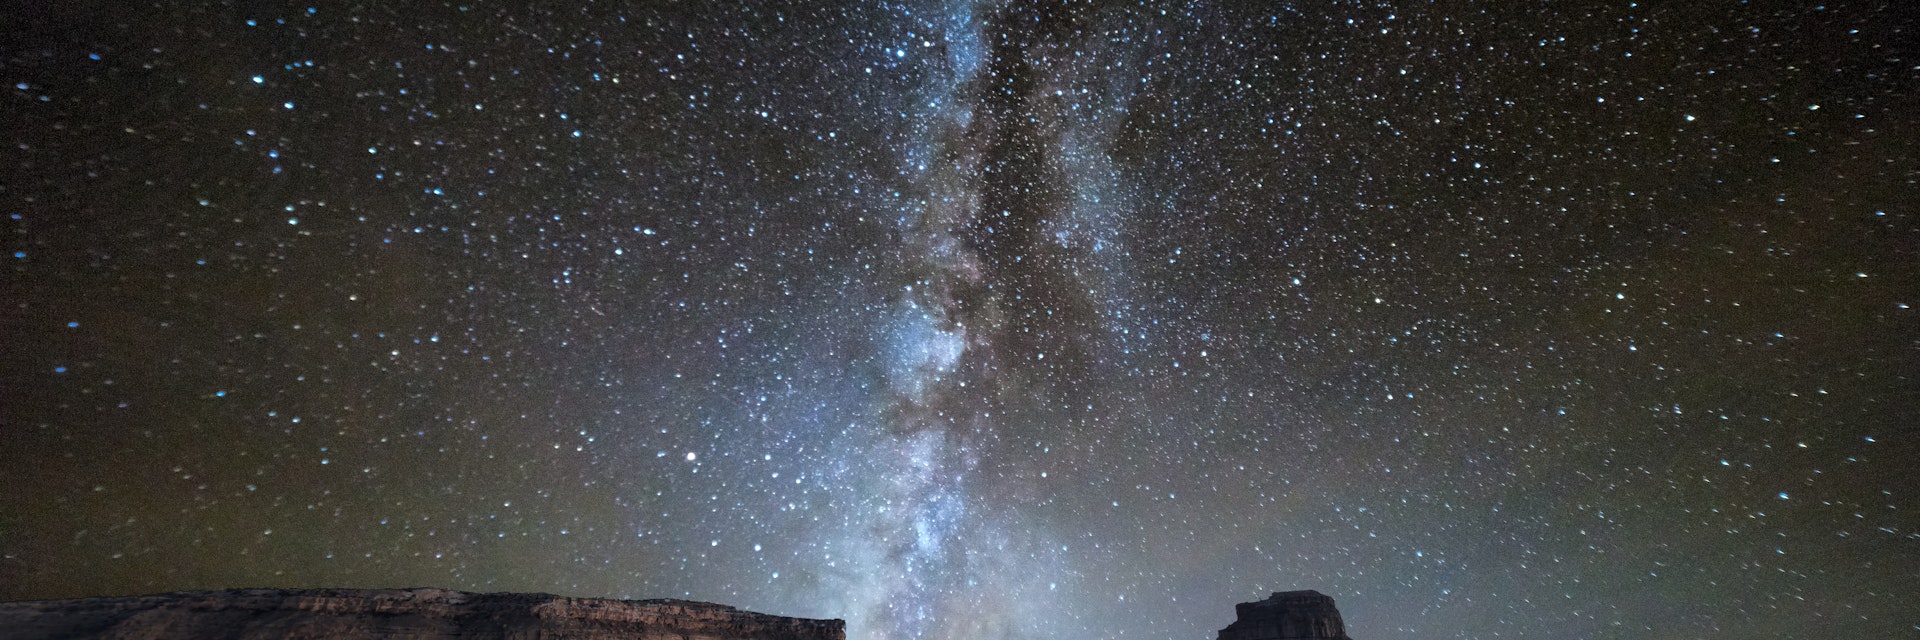 The Milky Way galaxy over Fajada Mesa at Chaco Canyon, New Mexico.